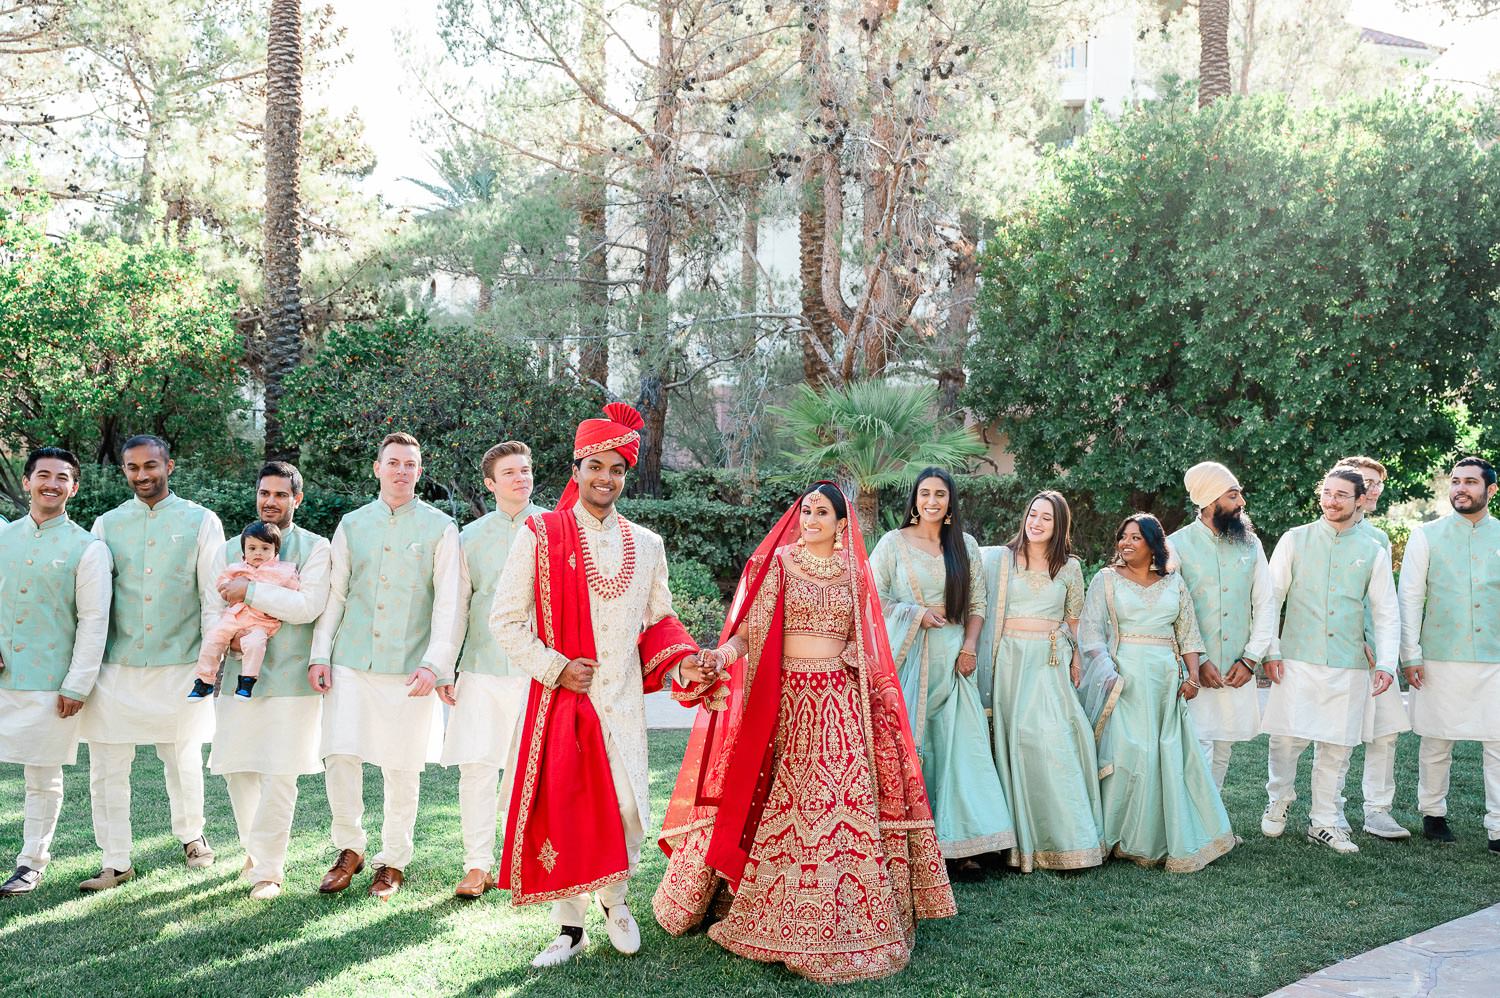 Las Vegas Indian Wedding | JW Marriott | Kristen Marie Weddings + Portraits